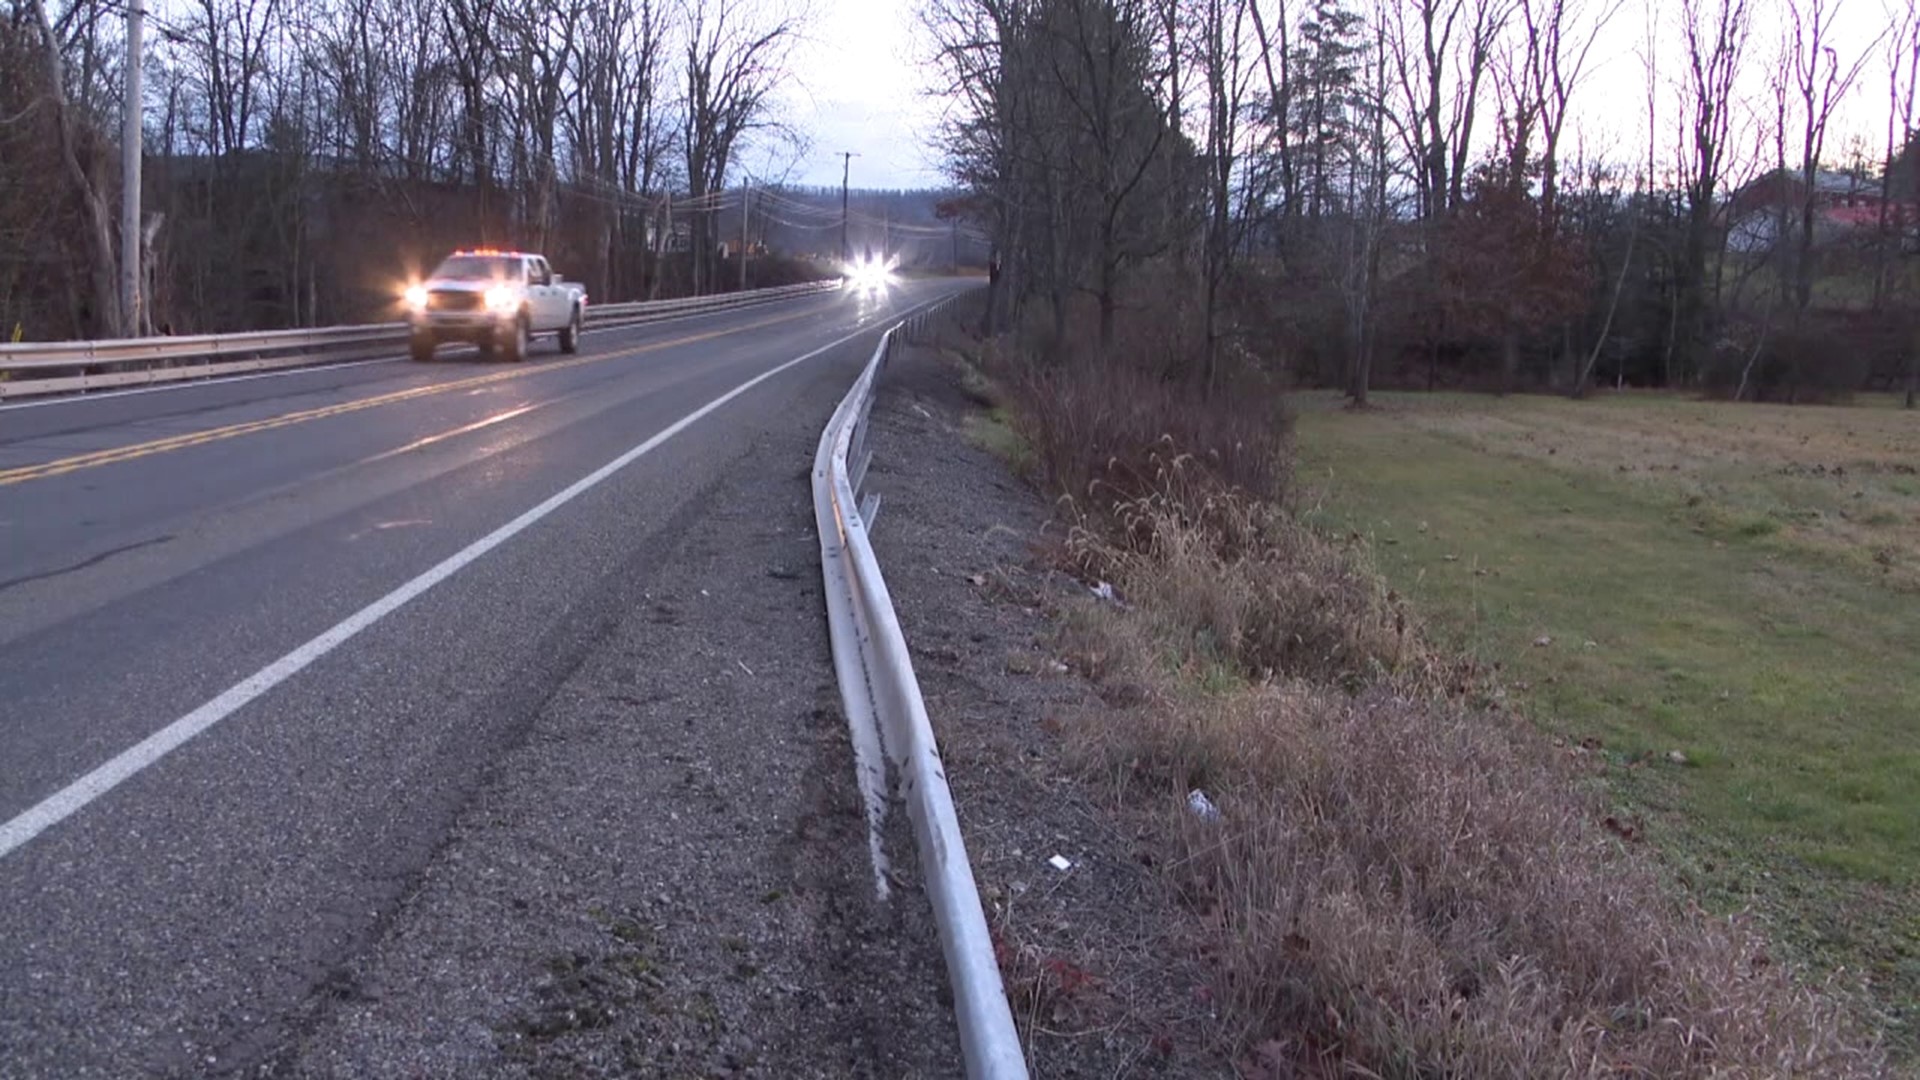 The crash happened on Route 487 near Benton on Wednesday morning.